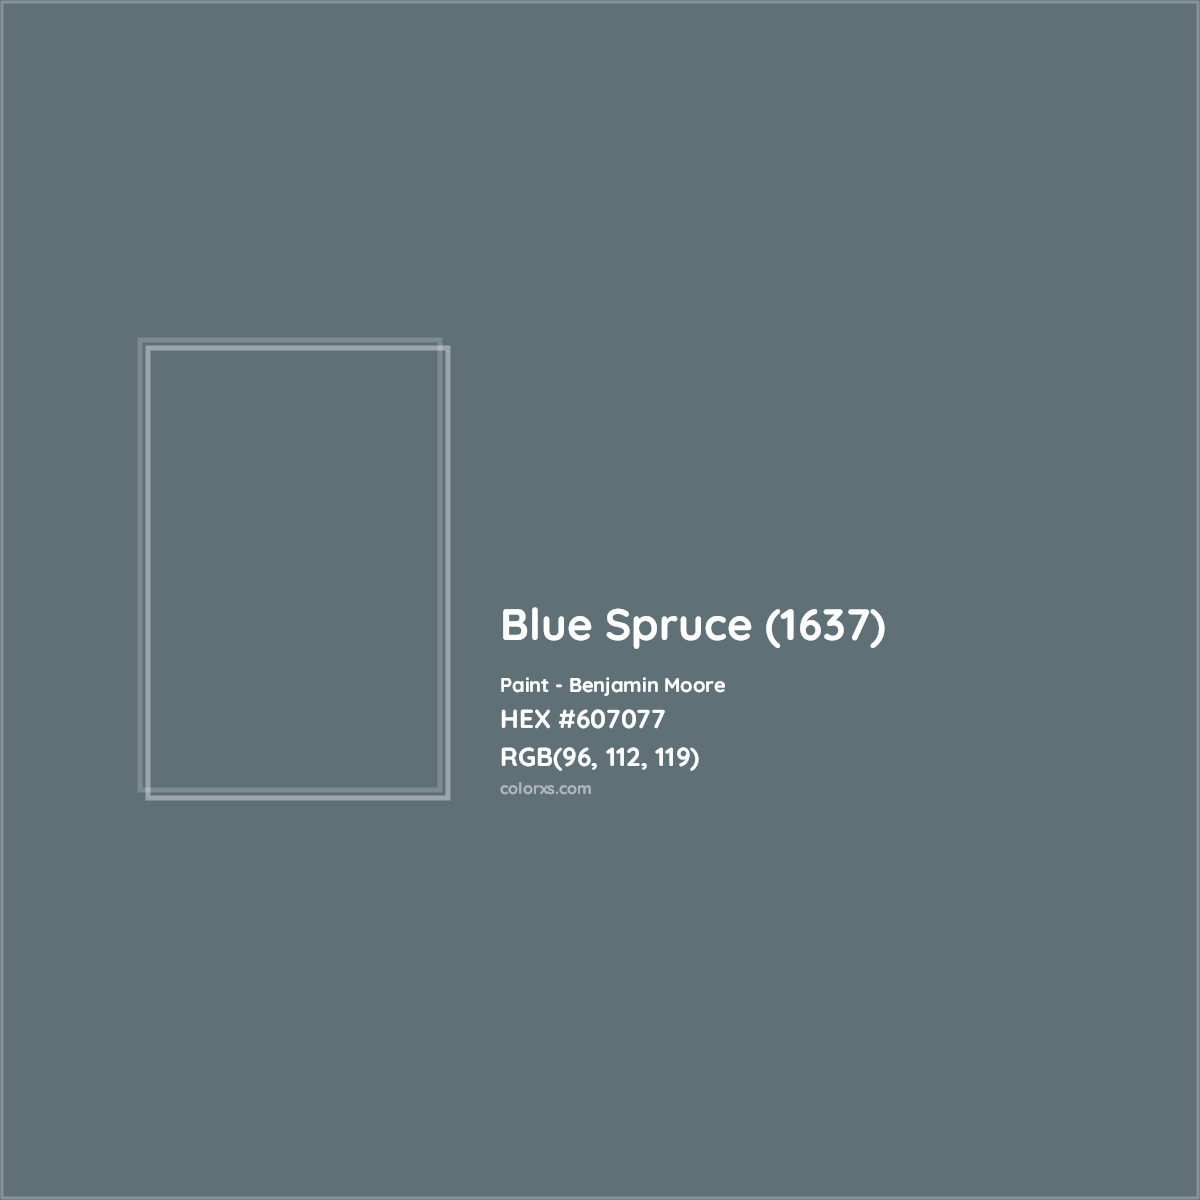 HEX #607077 Blue Spruce (1637) Paint Benjamin Moore - Color Code